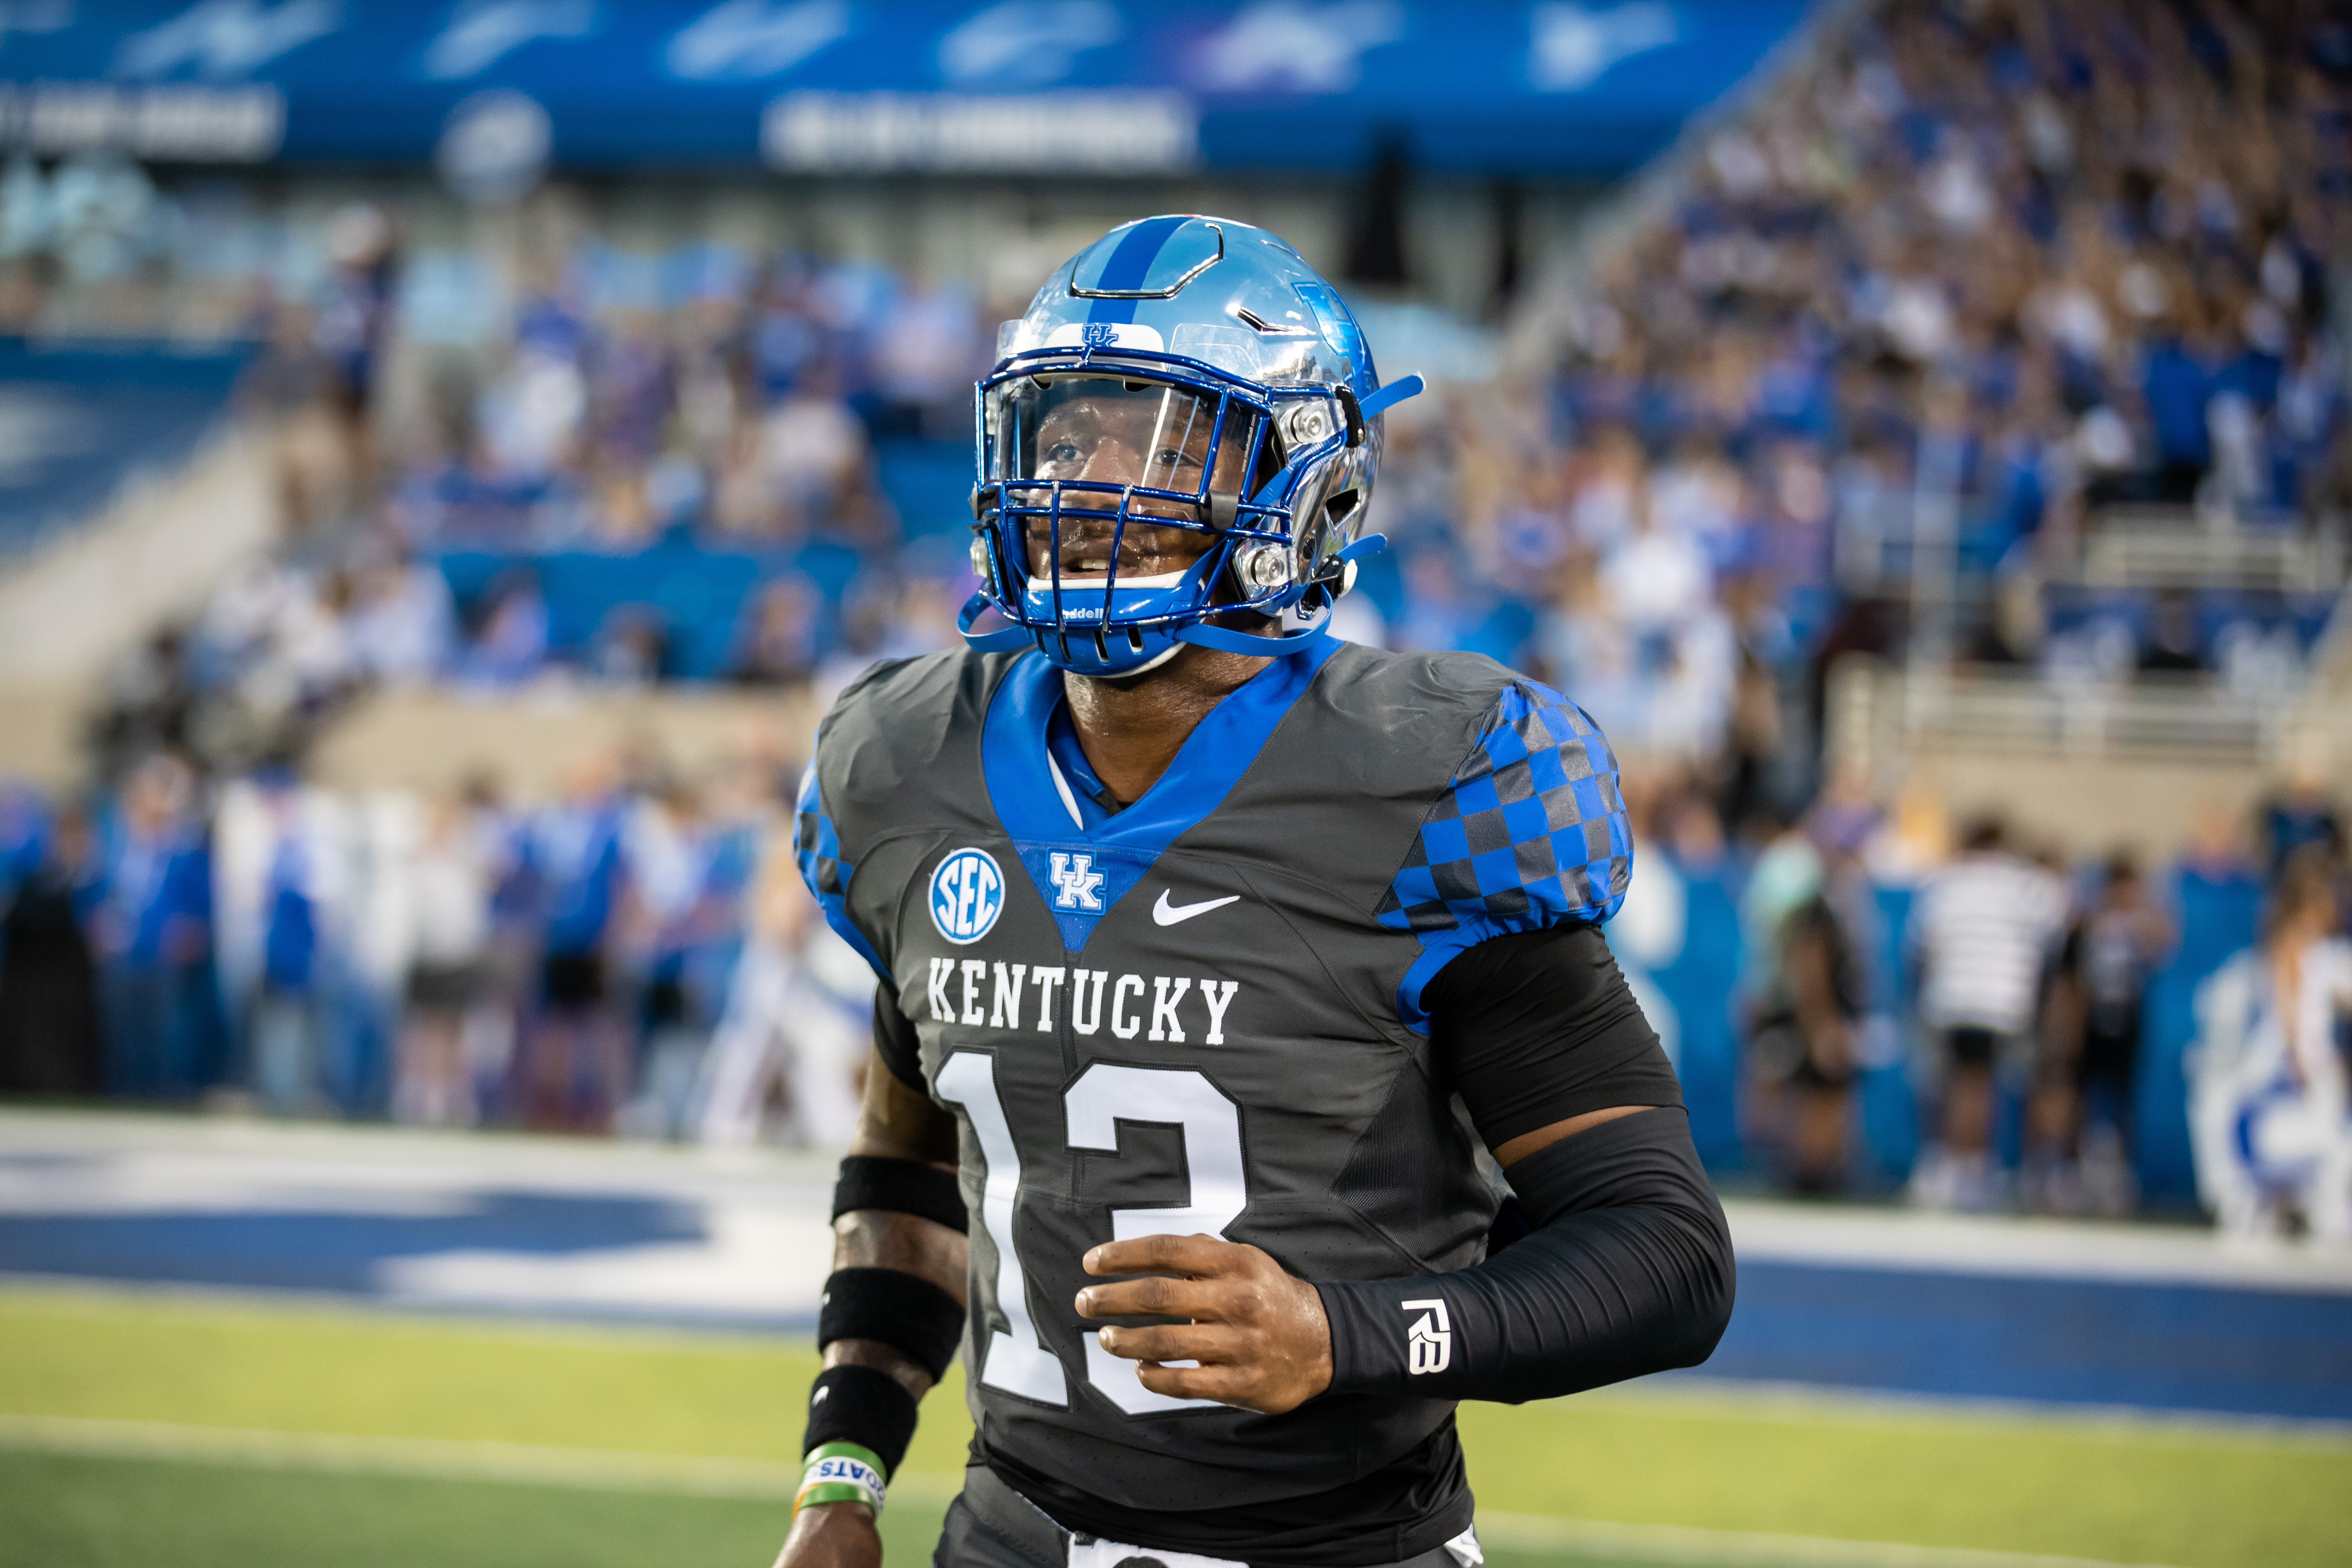 Tennessee football black uniforms return for Kentucky game